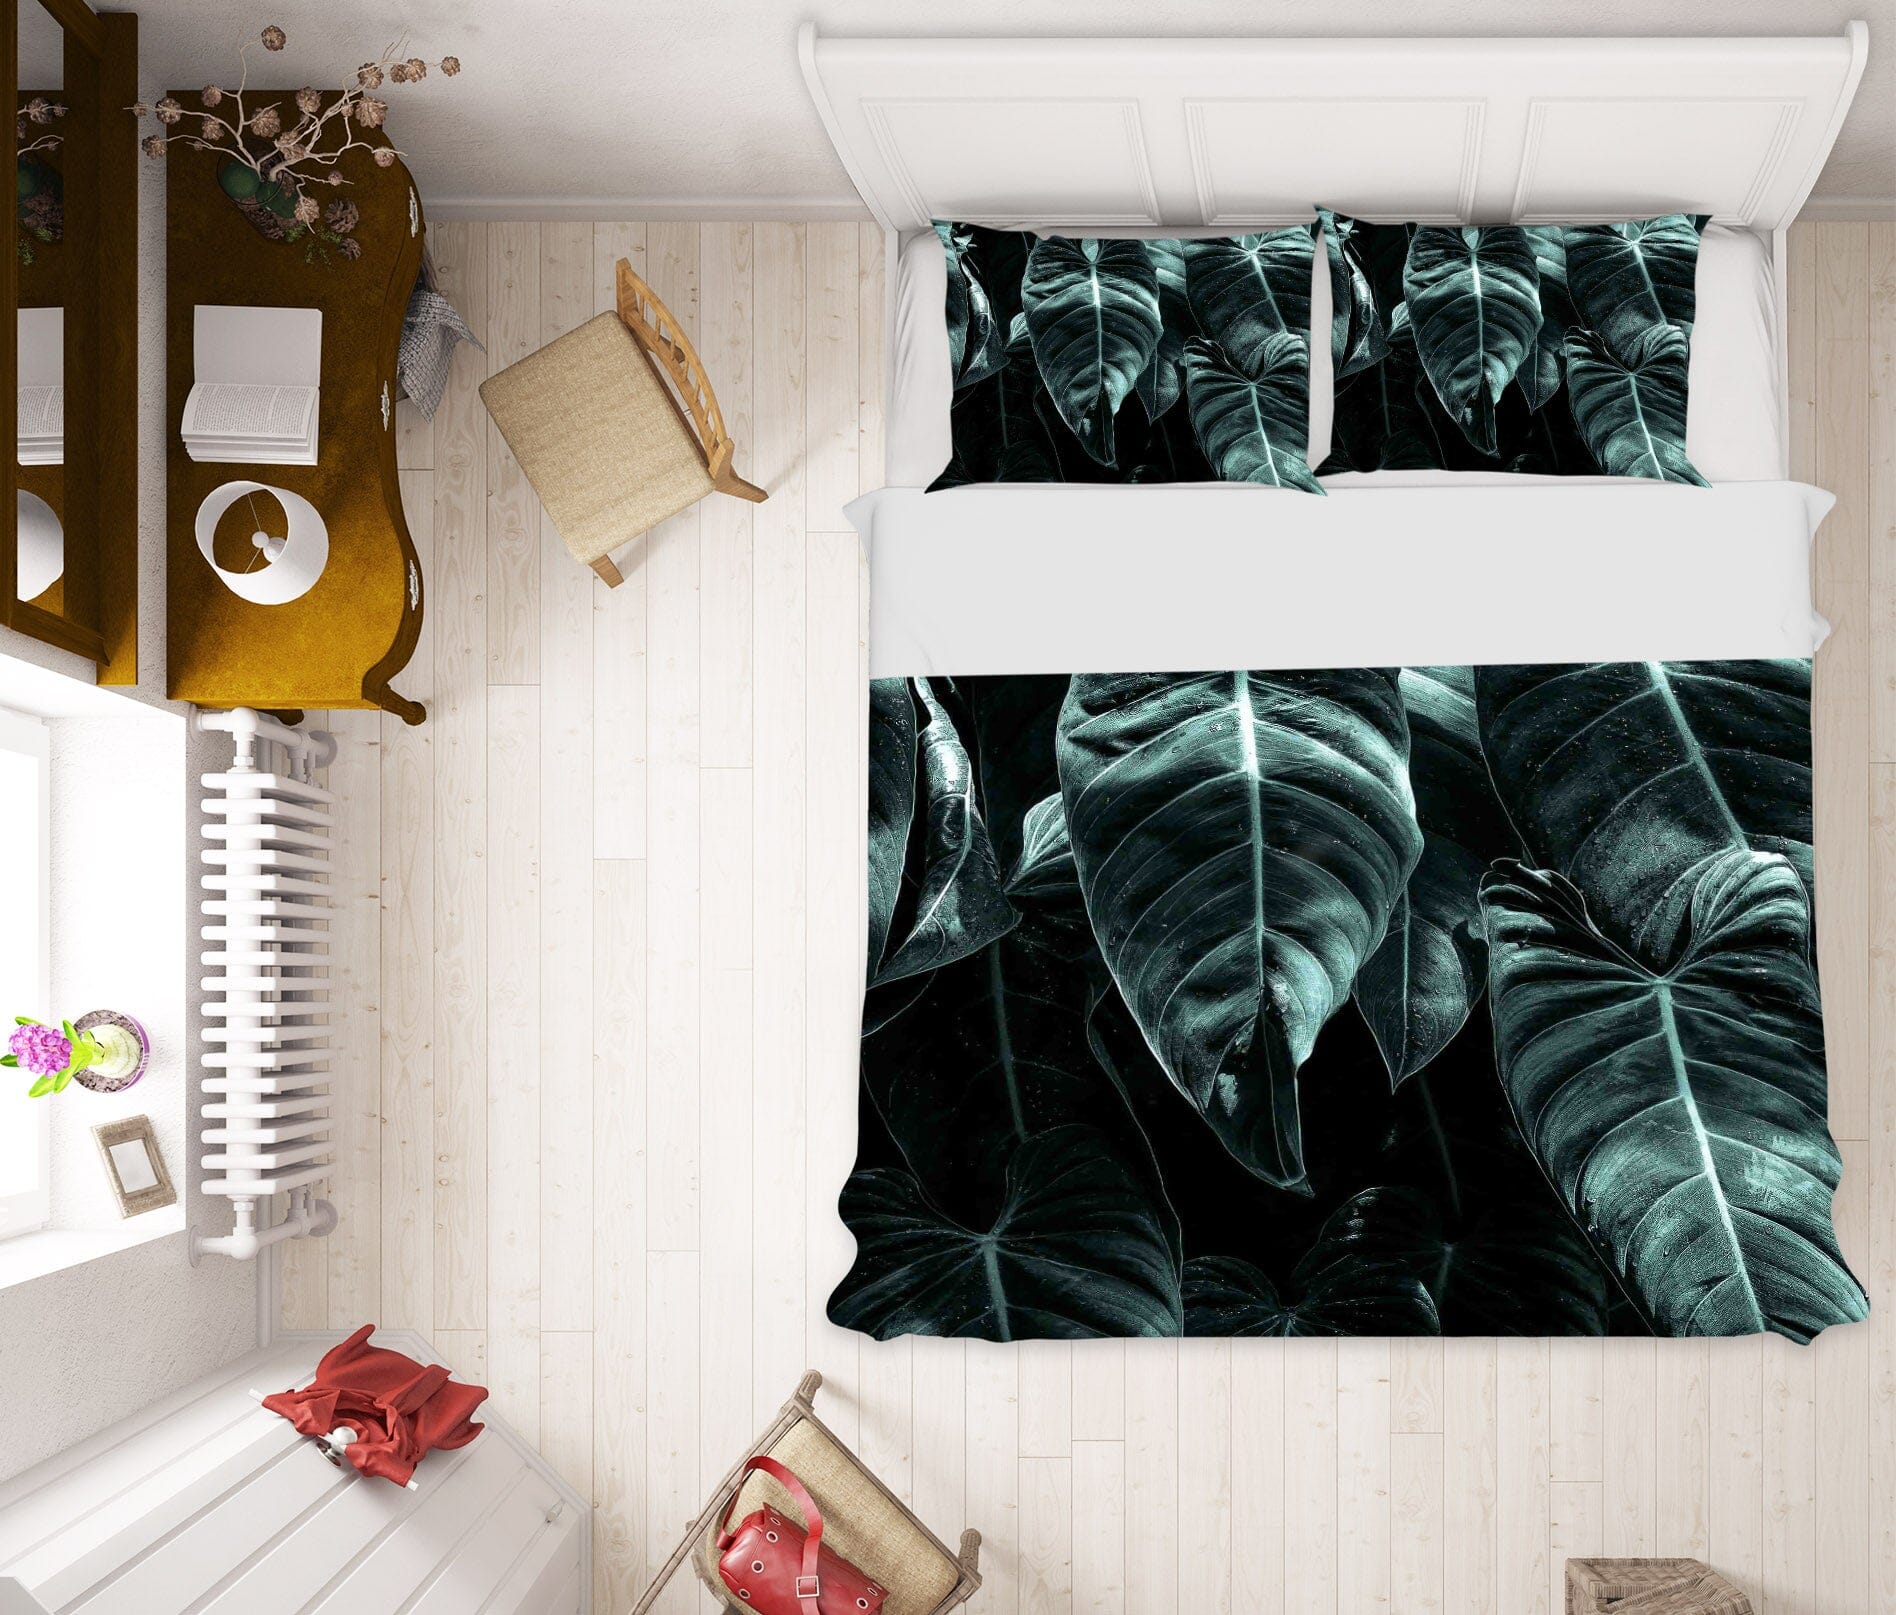 3D The Jungle 2118 Boris Draschoff Bedding Bed Pillowcases Quilt Quiet Covers AJ Creativity Home 